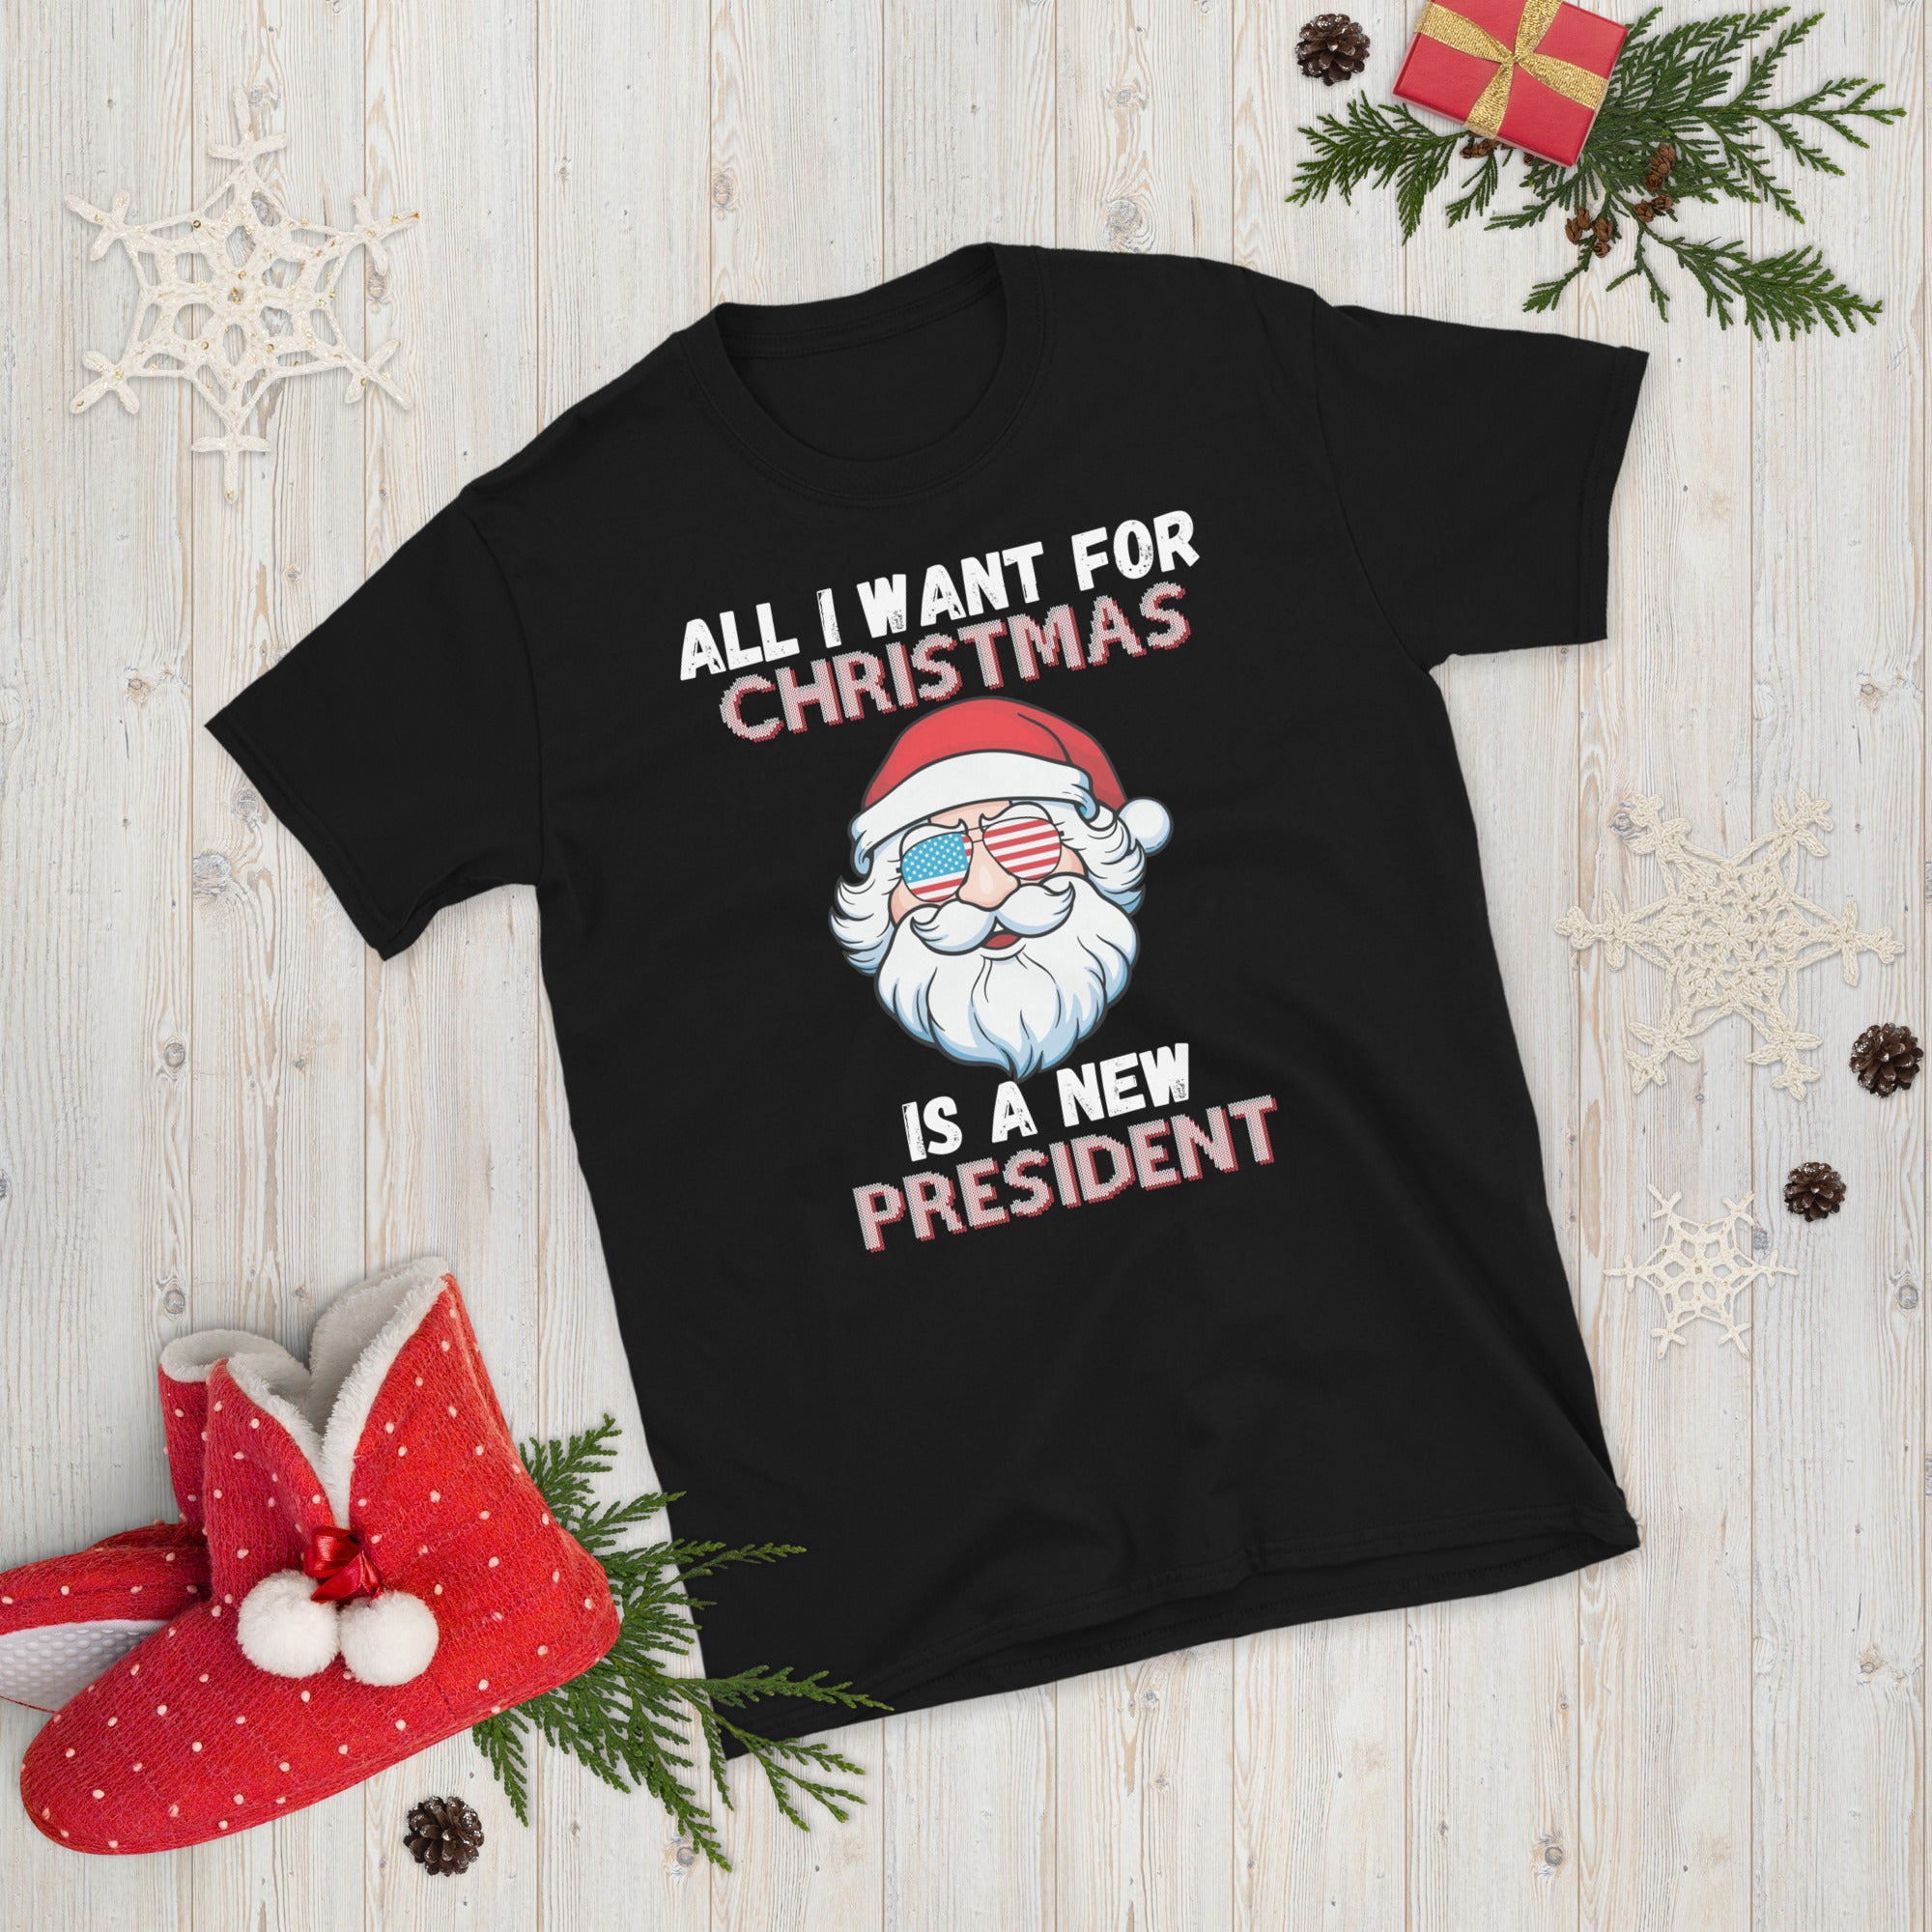 All I Want For Christmas Is A New President, Republican Christmas Shirt, FJB Xmas T Shirt, Xmas Conservative Shirt, Impeach Biden Shirt - Madeinsea©